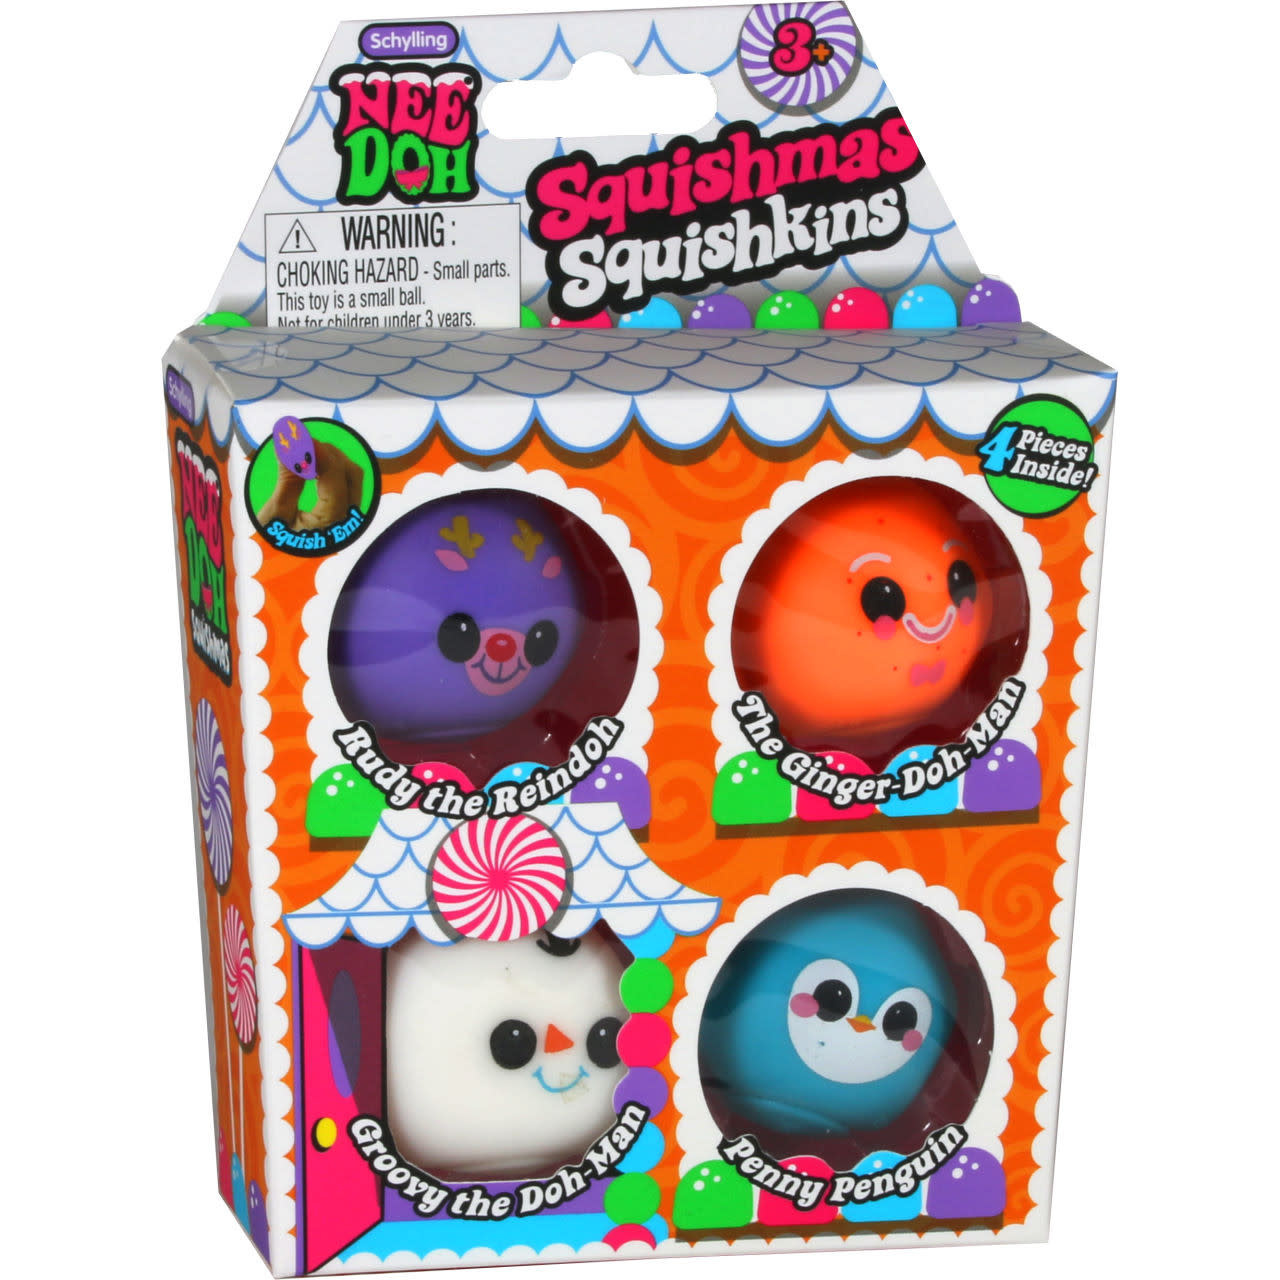 Nee Doh Squishmas Squishkins - PlayMatters Toys